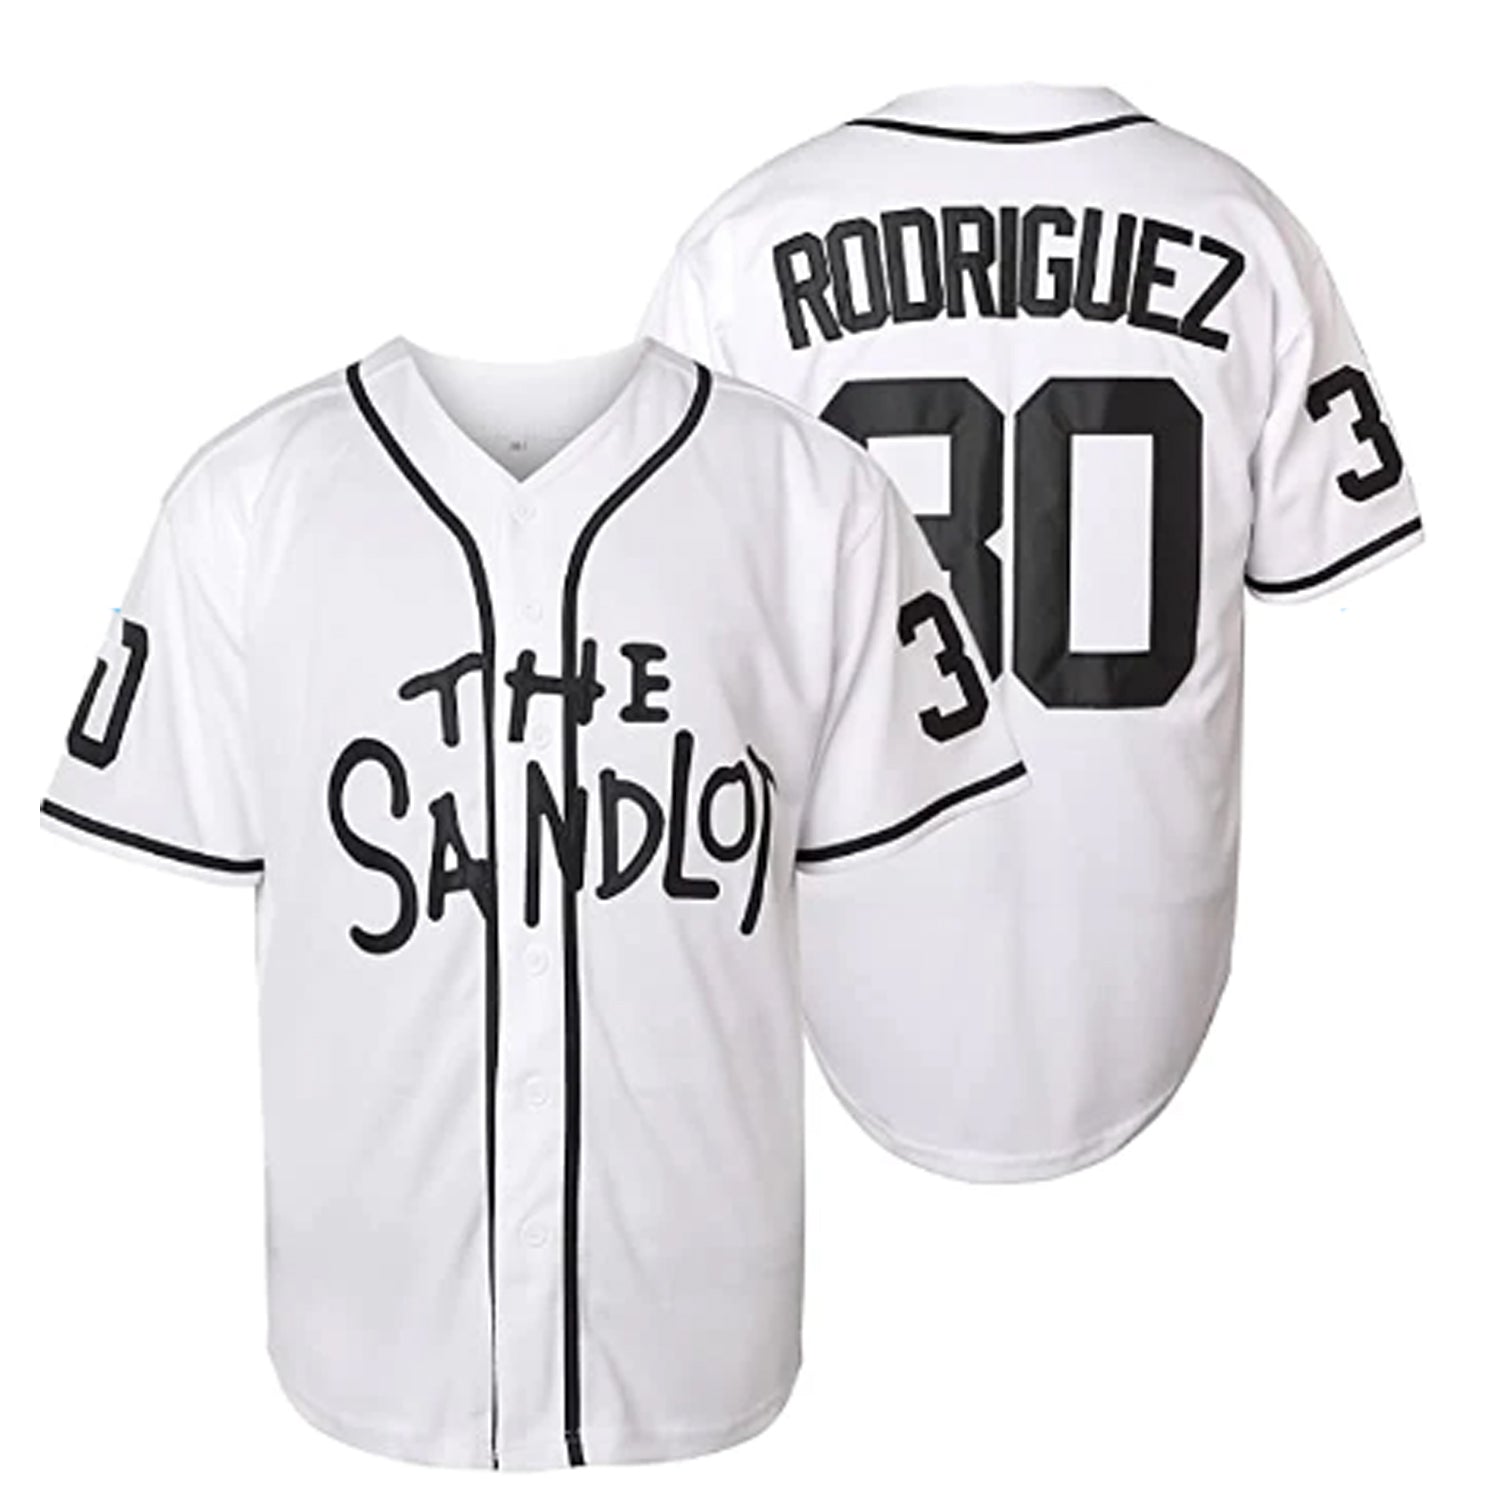 The Sandlot Rodriguez 30 Baseball Jersey